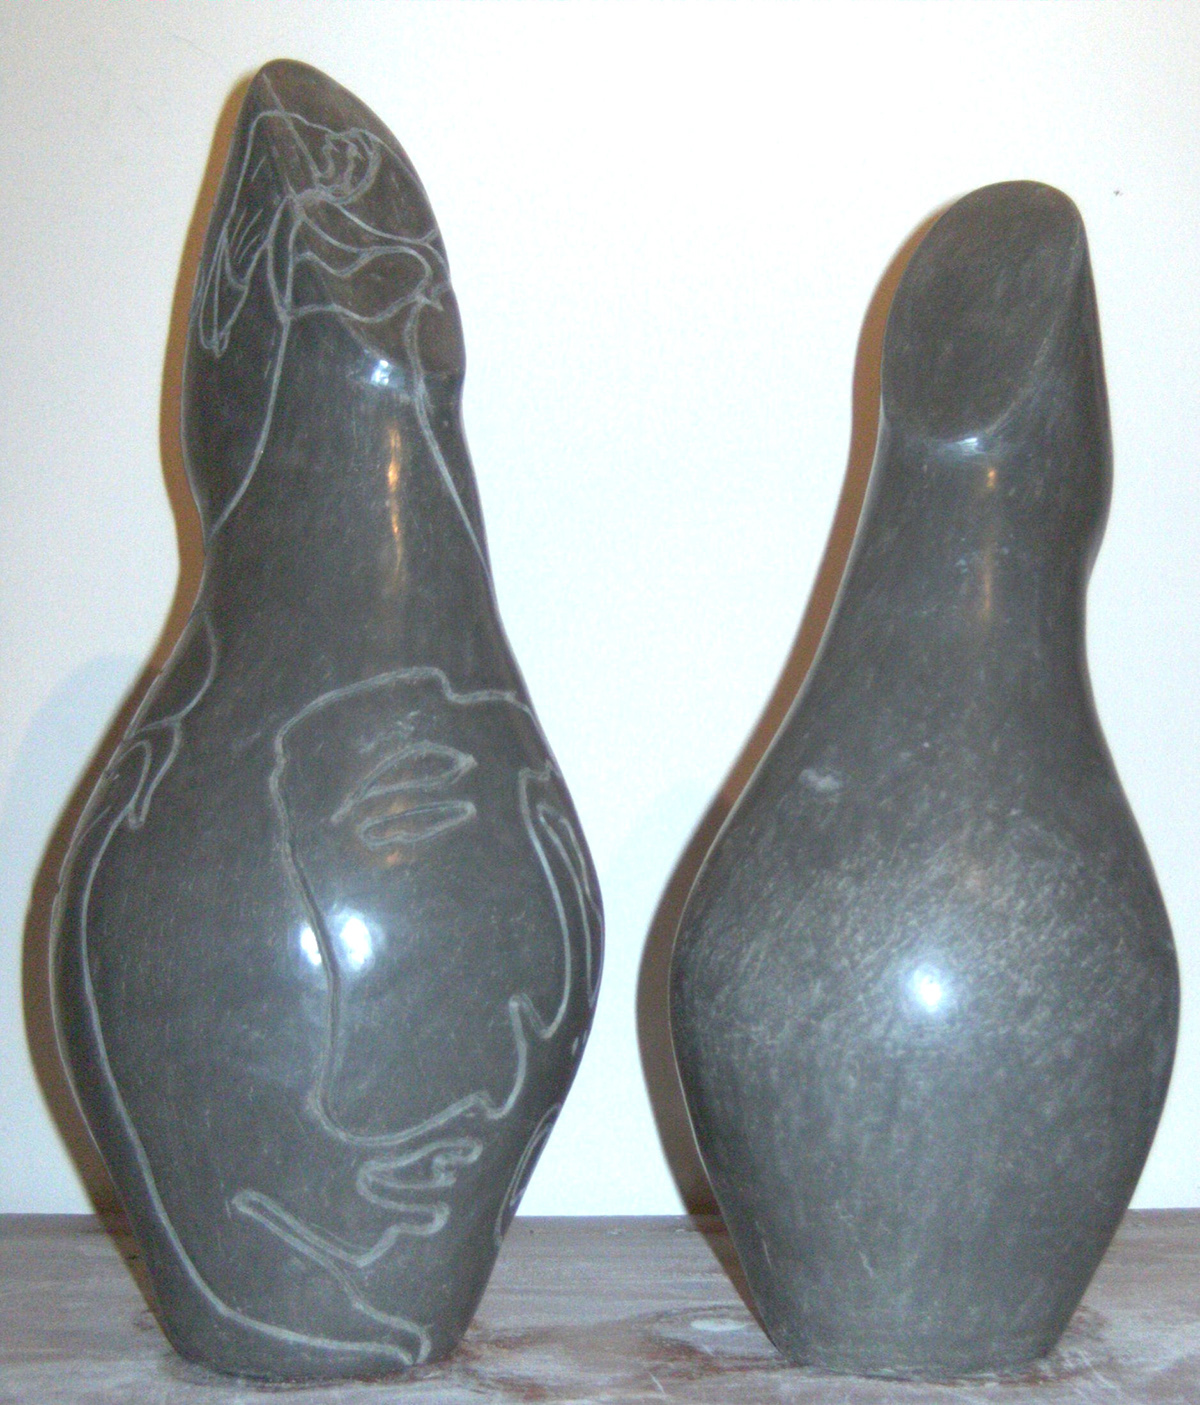 acid  Illustration  ceramics  vessels  sculpture  iranian  subversive